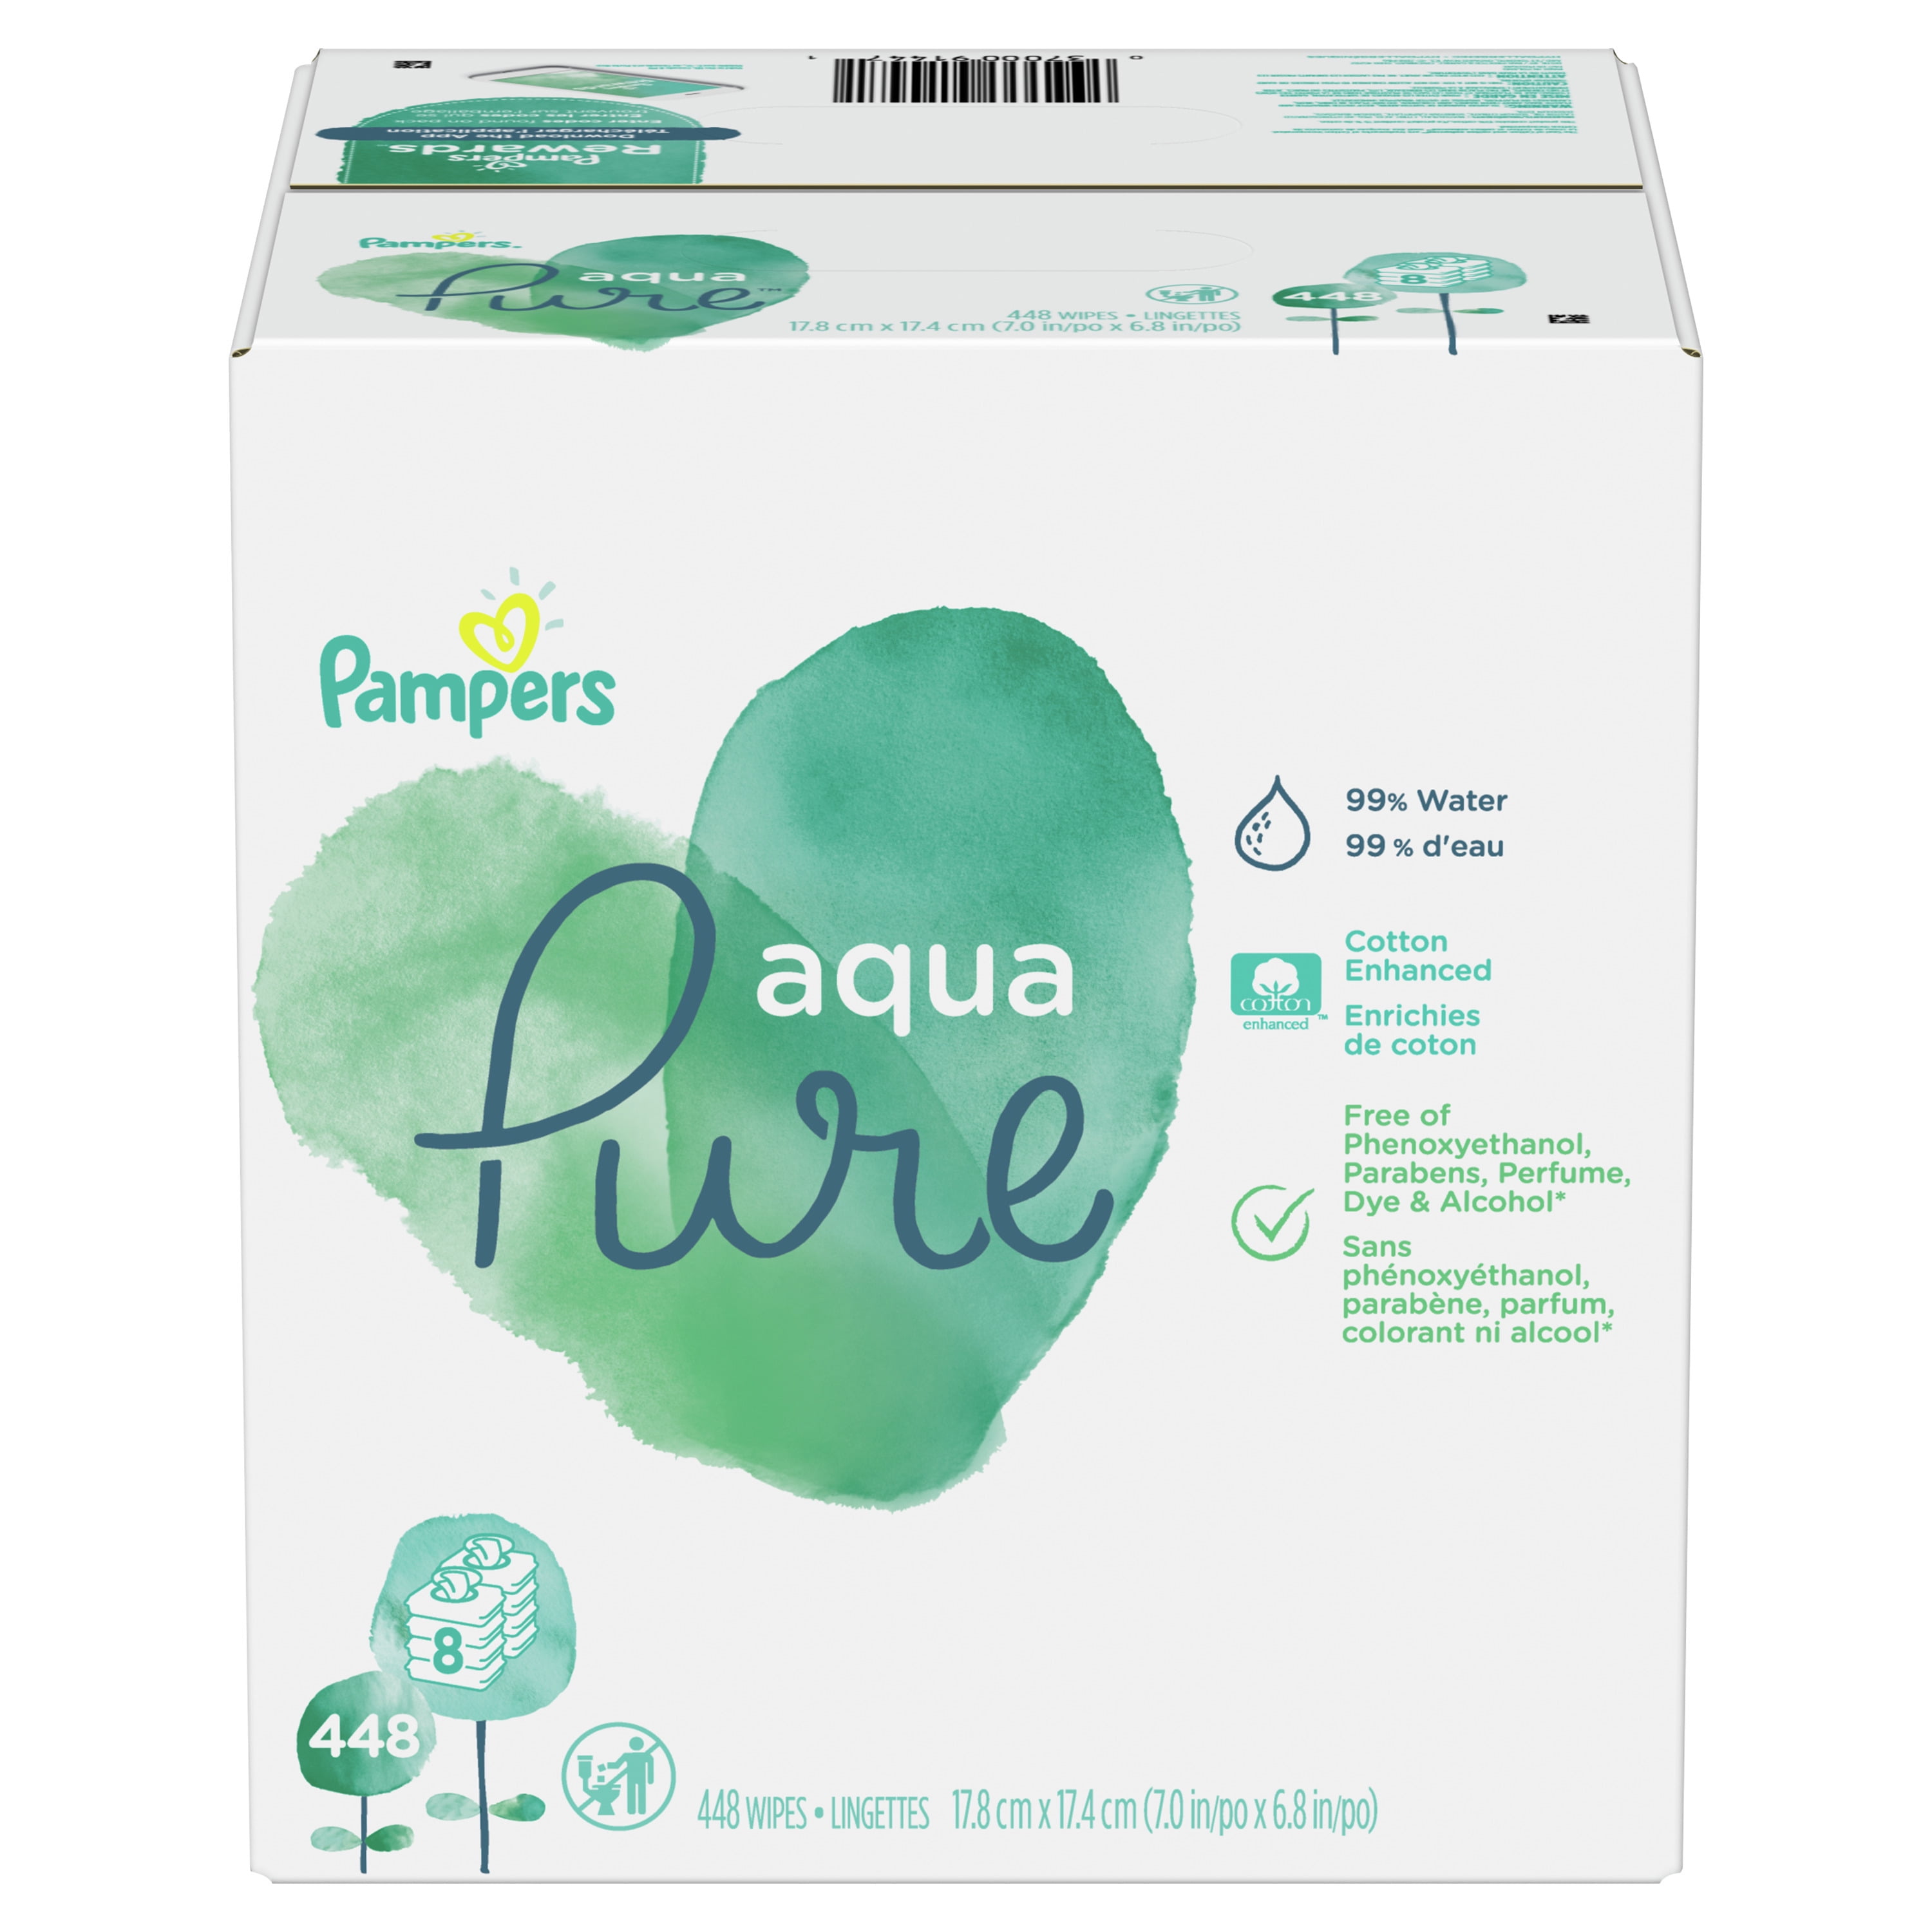 Pampers Aqua Pure Toallitas para bebés, sensitivo, con agua, 6 cajas tipo  tapa emergente, 6 recambios, 1